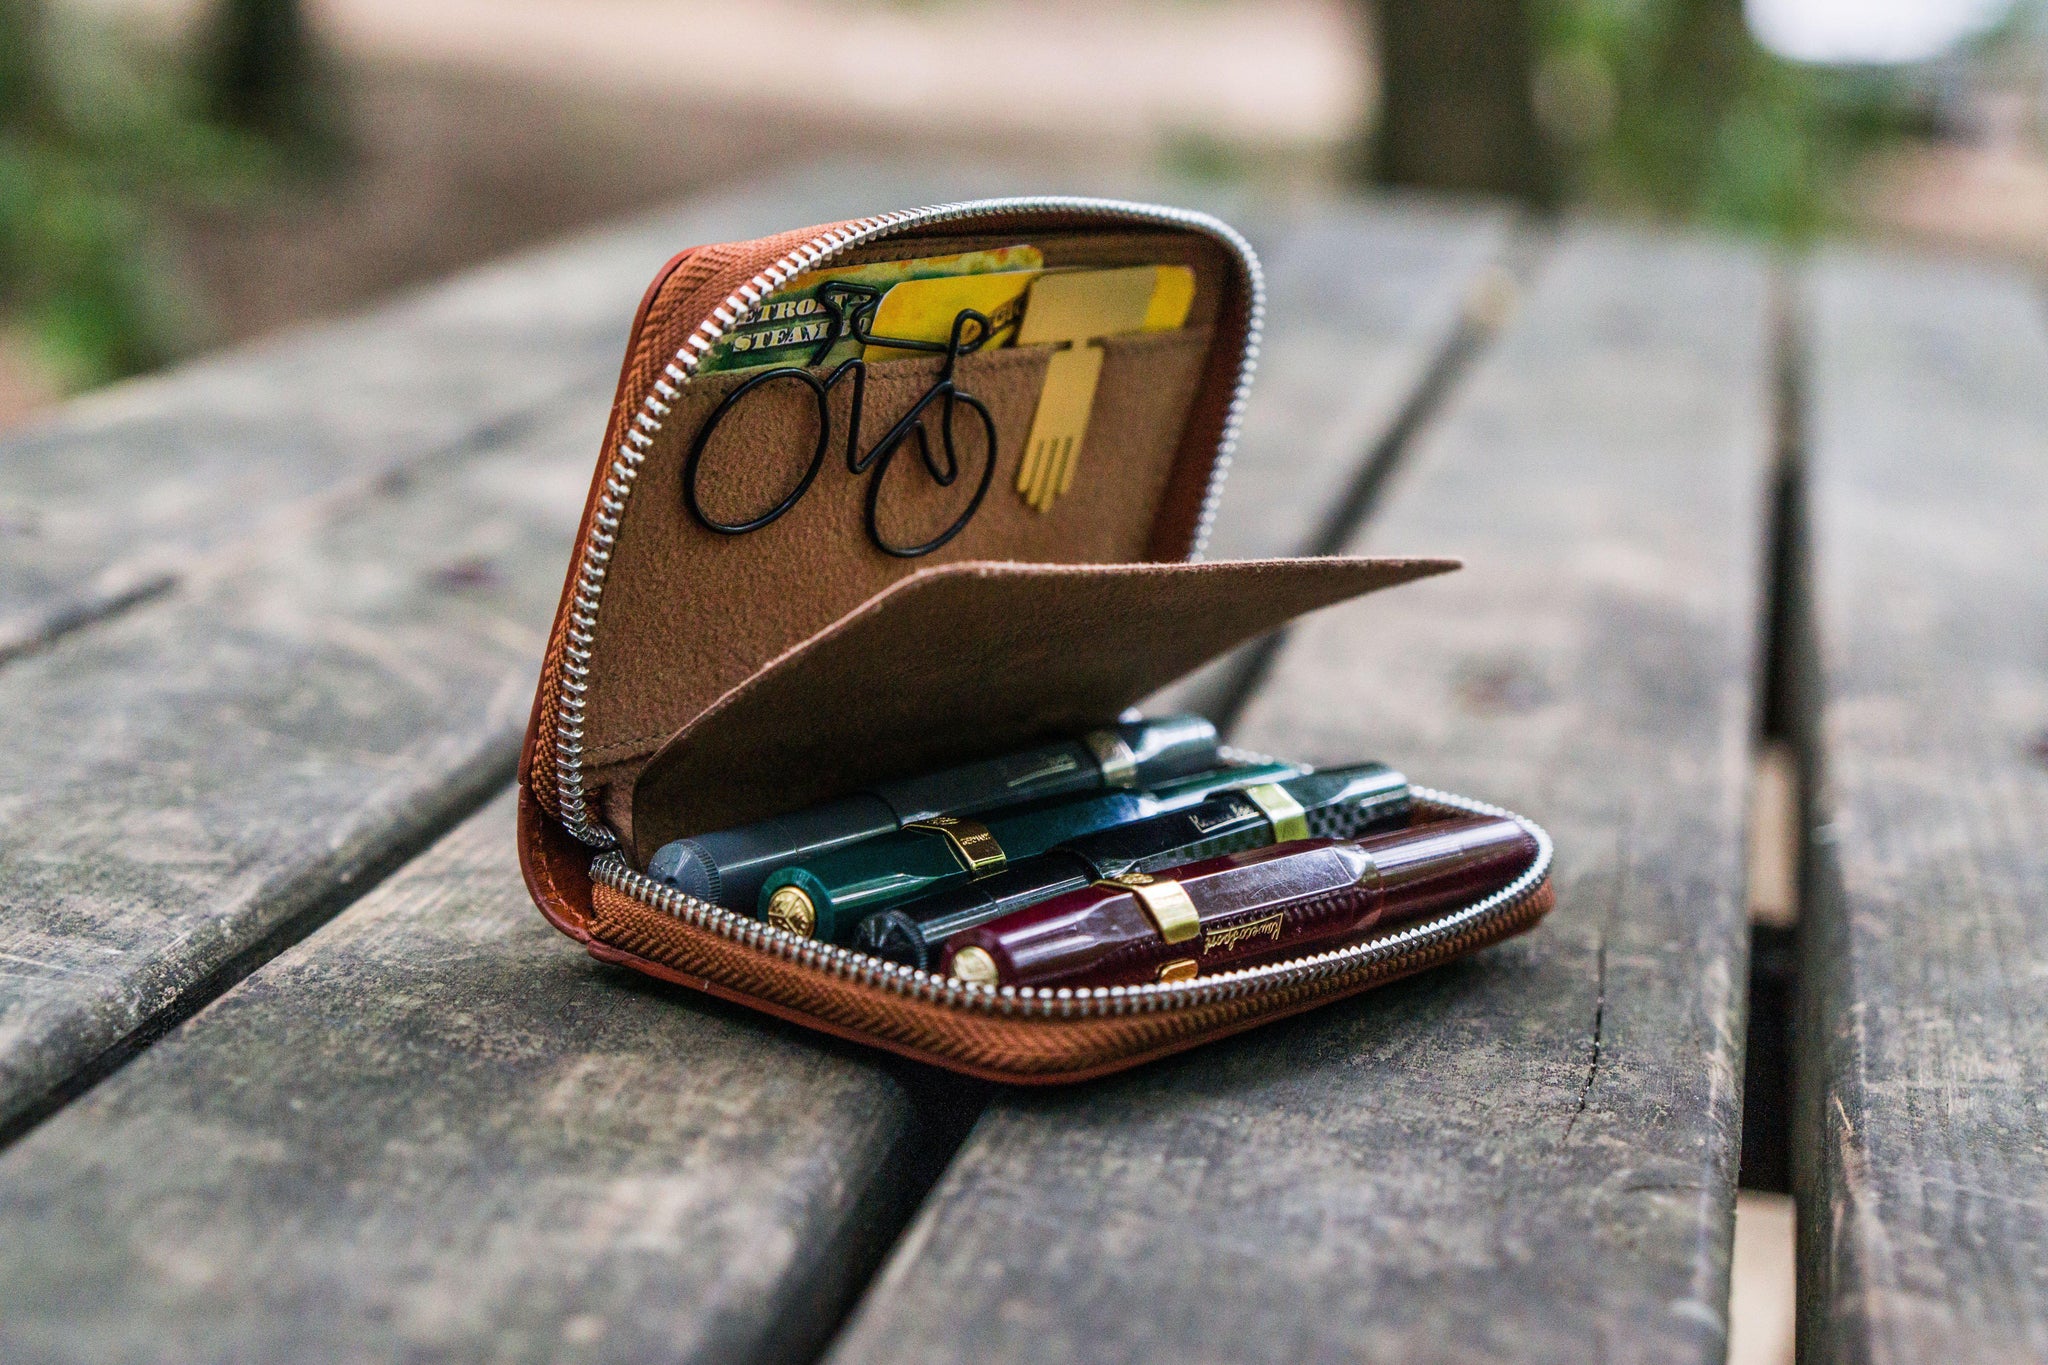 Victorinox Leather Credit Card Sleeve Holder Slim Leather Wallet handmade